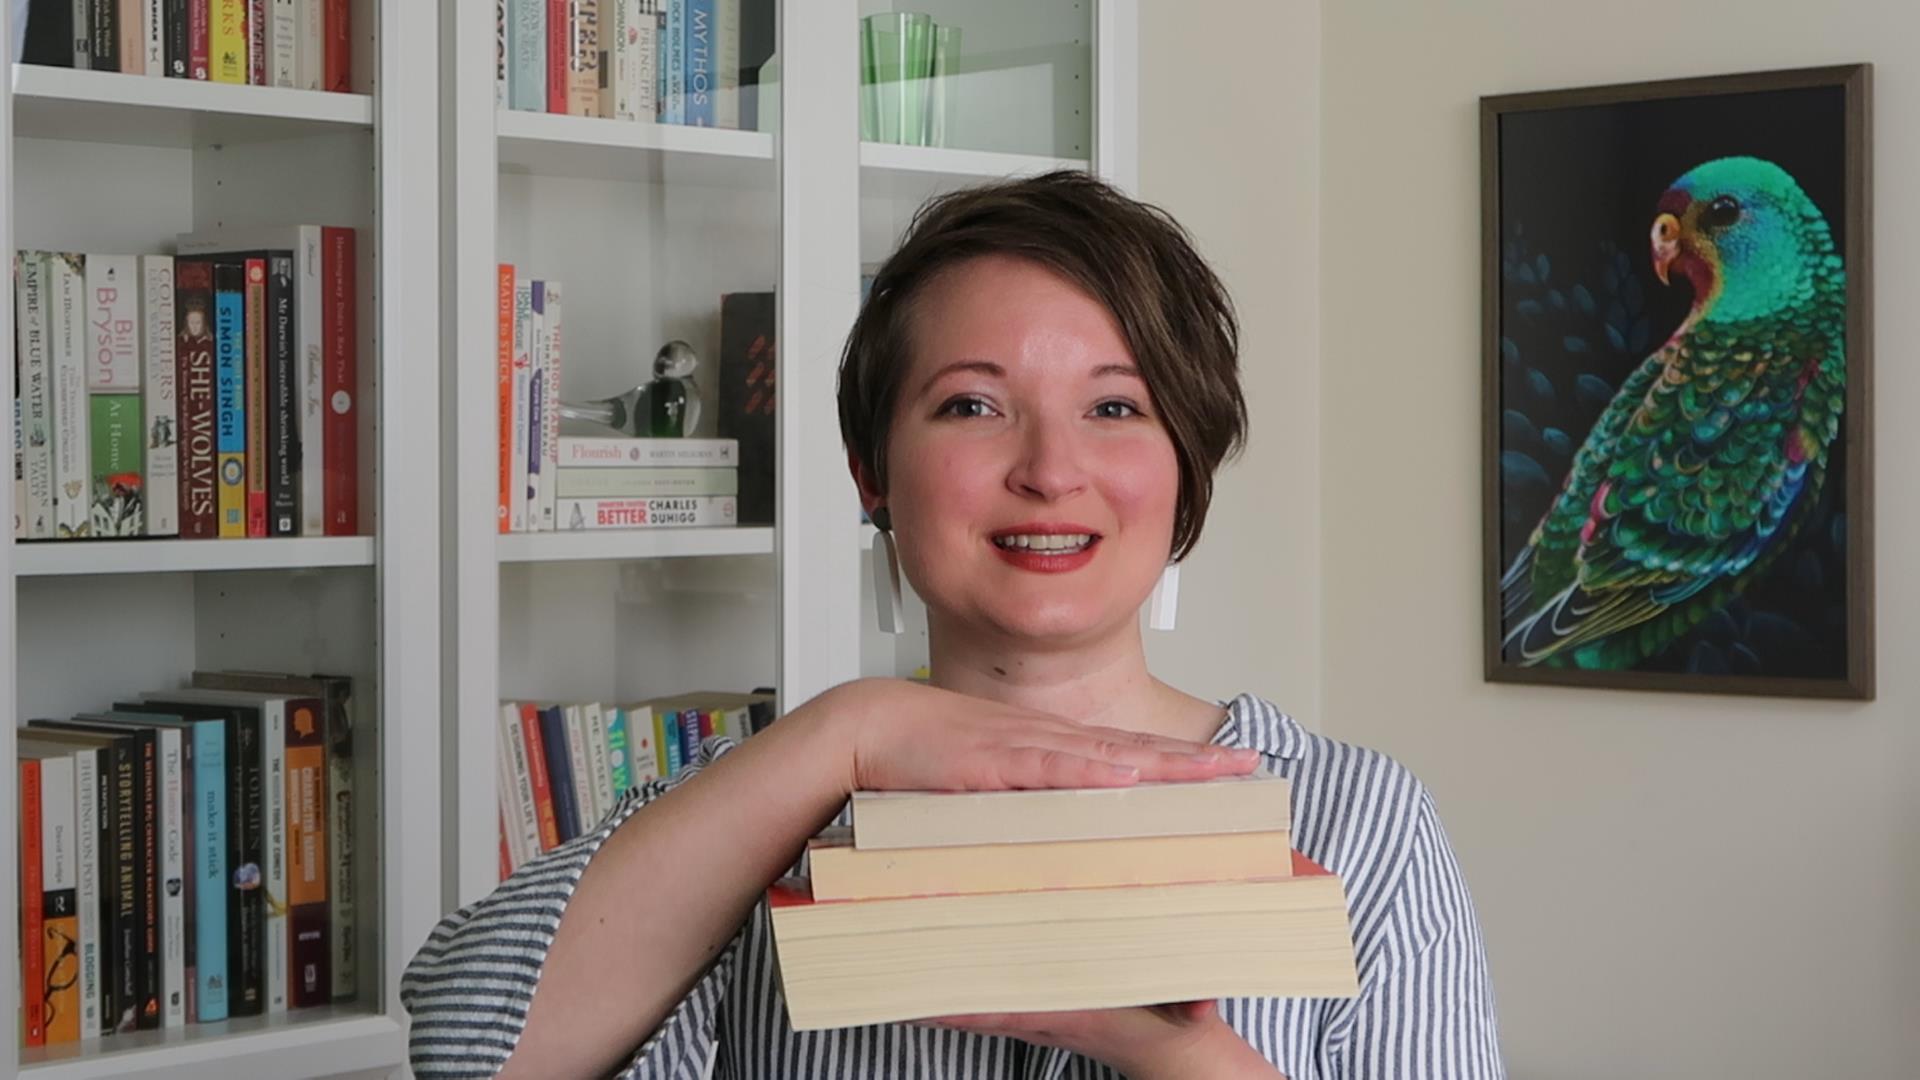 Christina smiles, while holding up three books